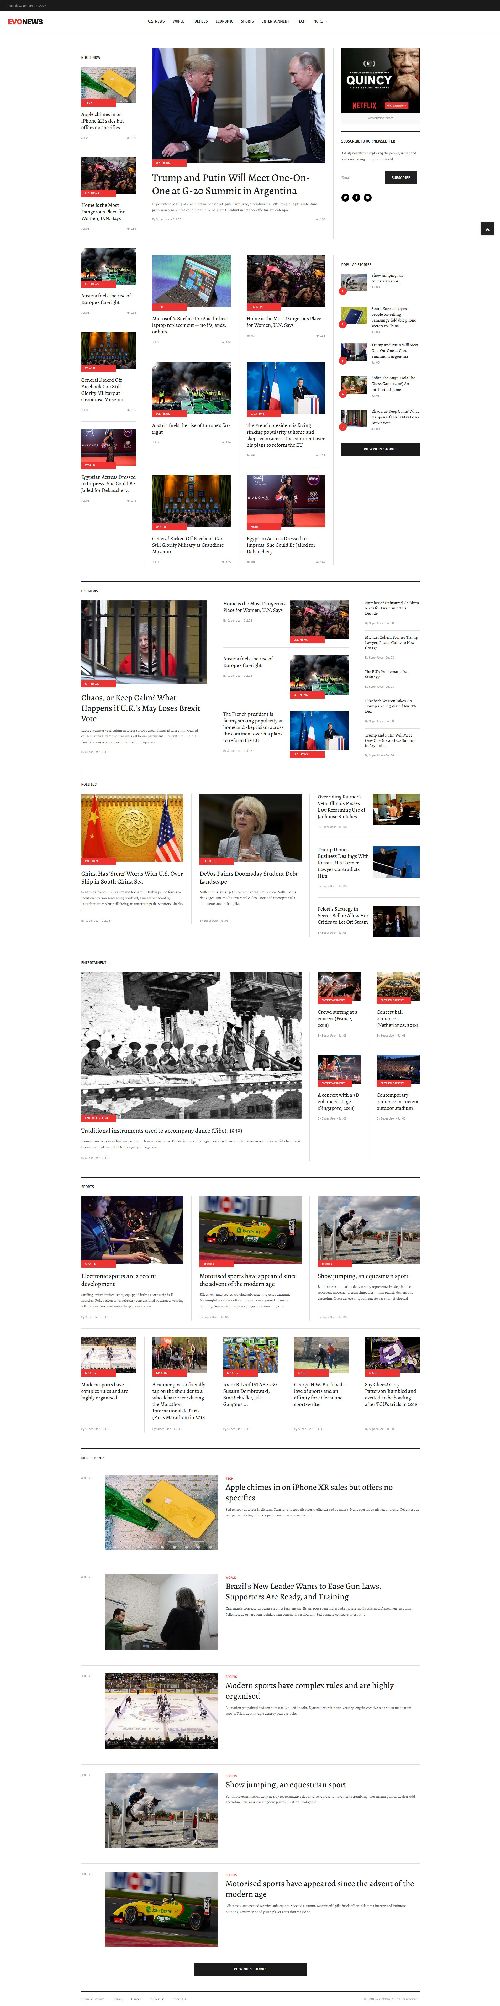 Evo News - News, Magazine Online Websites Joomla Template